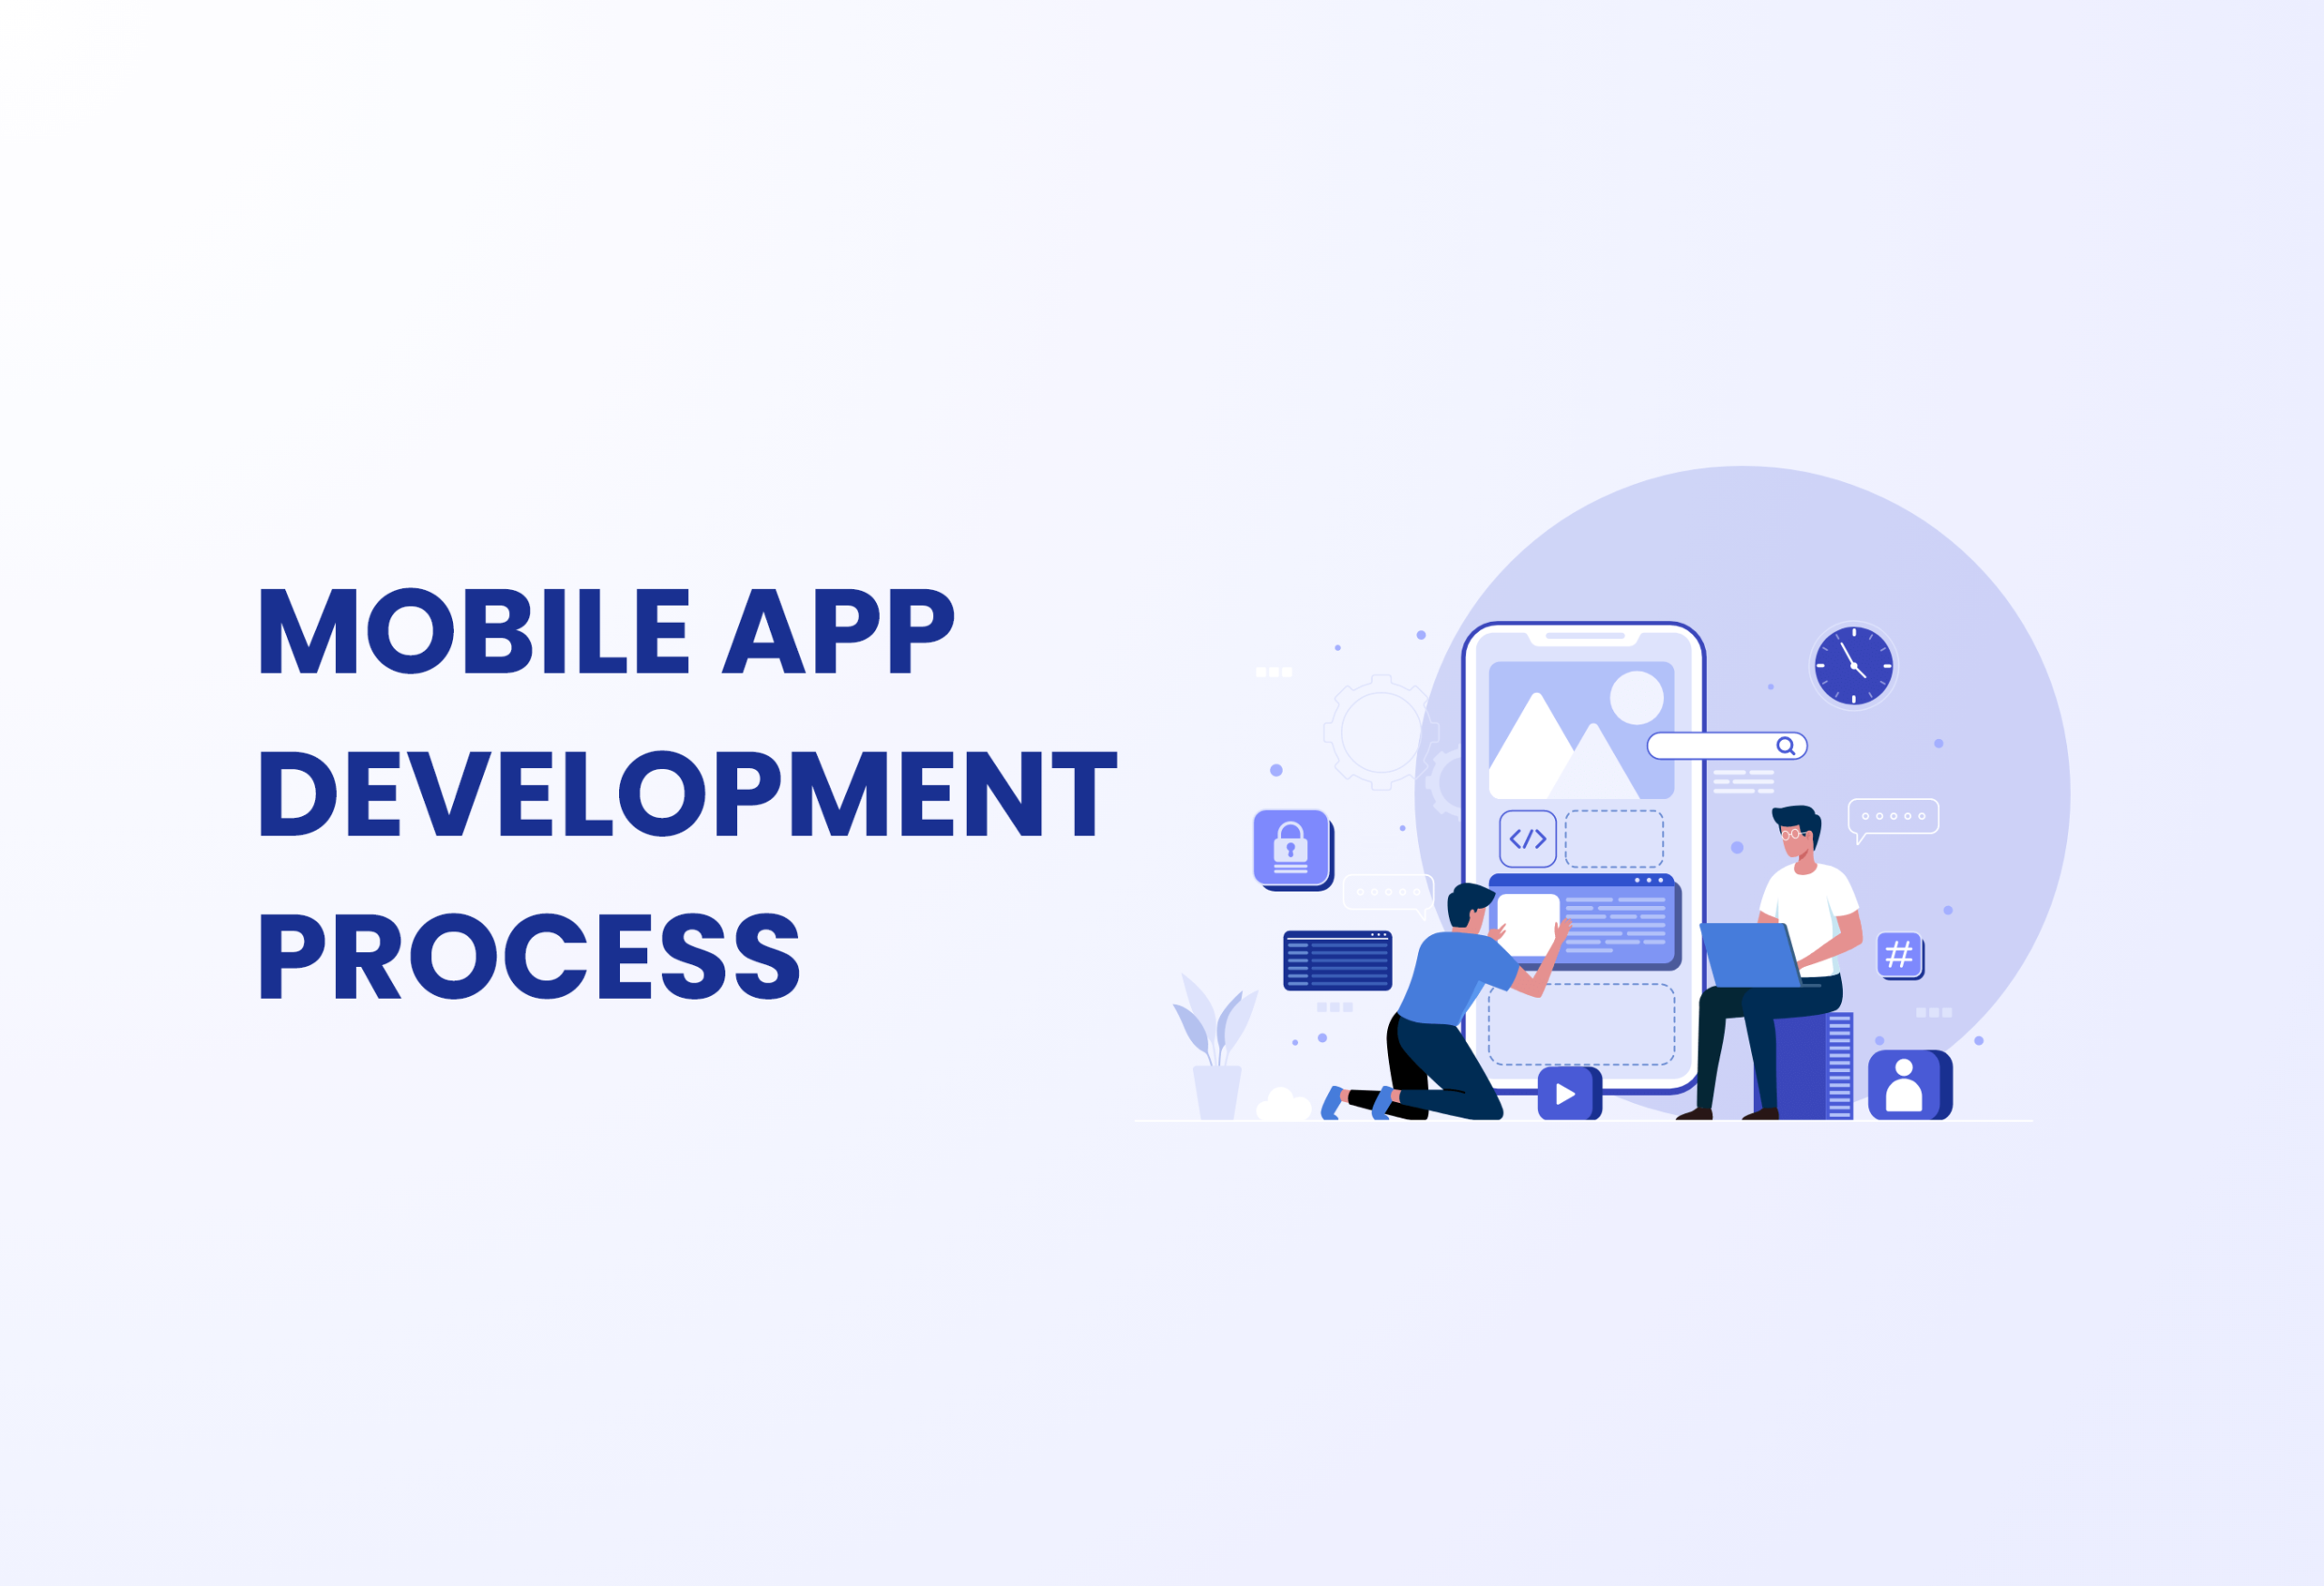 Mobile Application Development Process